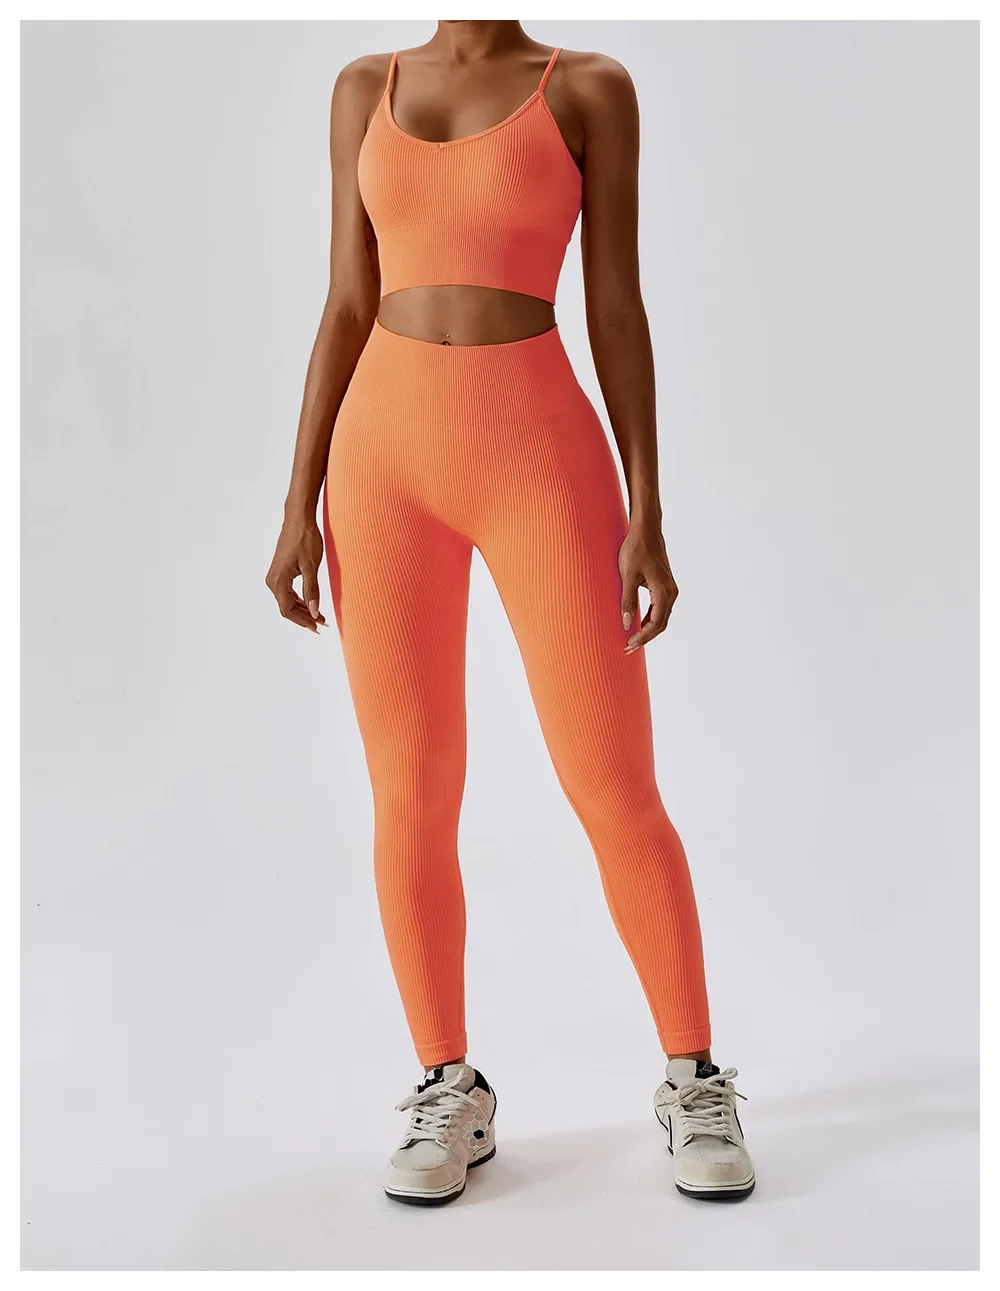 Fashionable Gym Workout High Waisted Activewear Sports Apparel Yoga Leggings gym wear women sets